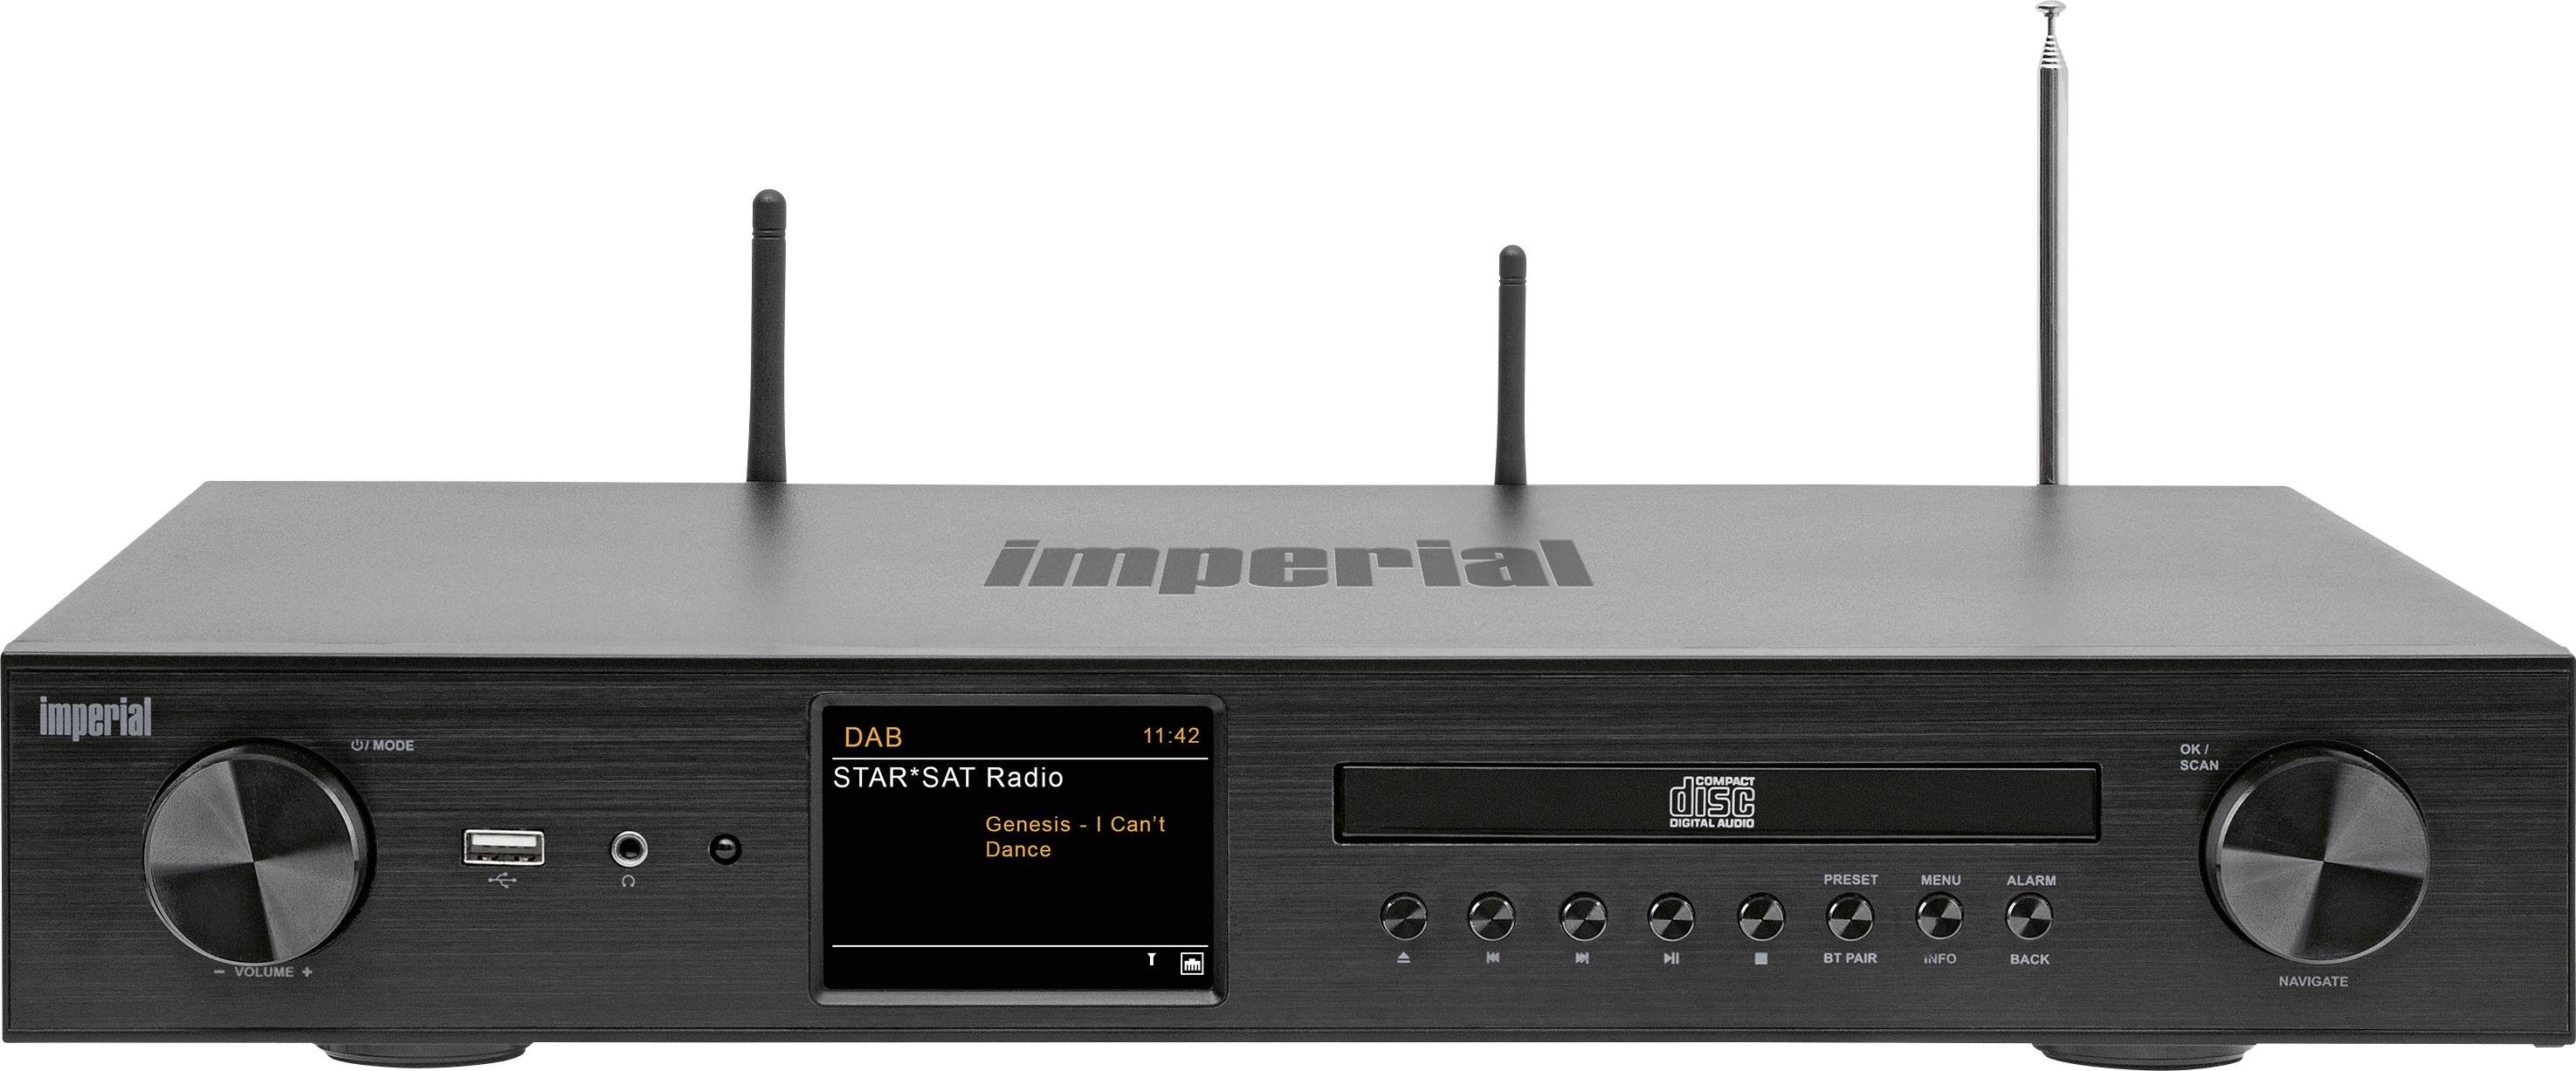 Imperial DABMAN i550CD Netwerk stereo-receiver 2x42 W Zwart Bluetooth, DAB+, Internetradio, WiFi kopen ? Conrad Electronic